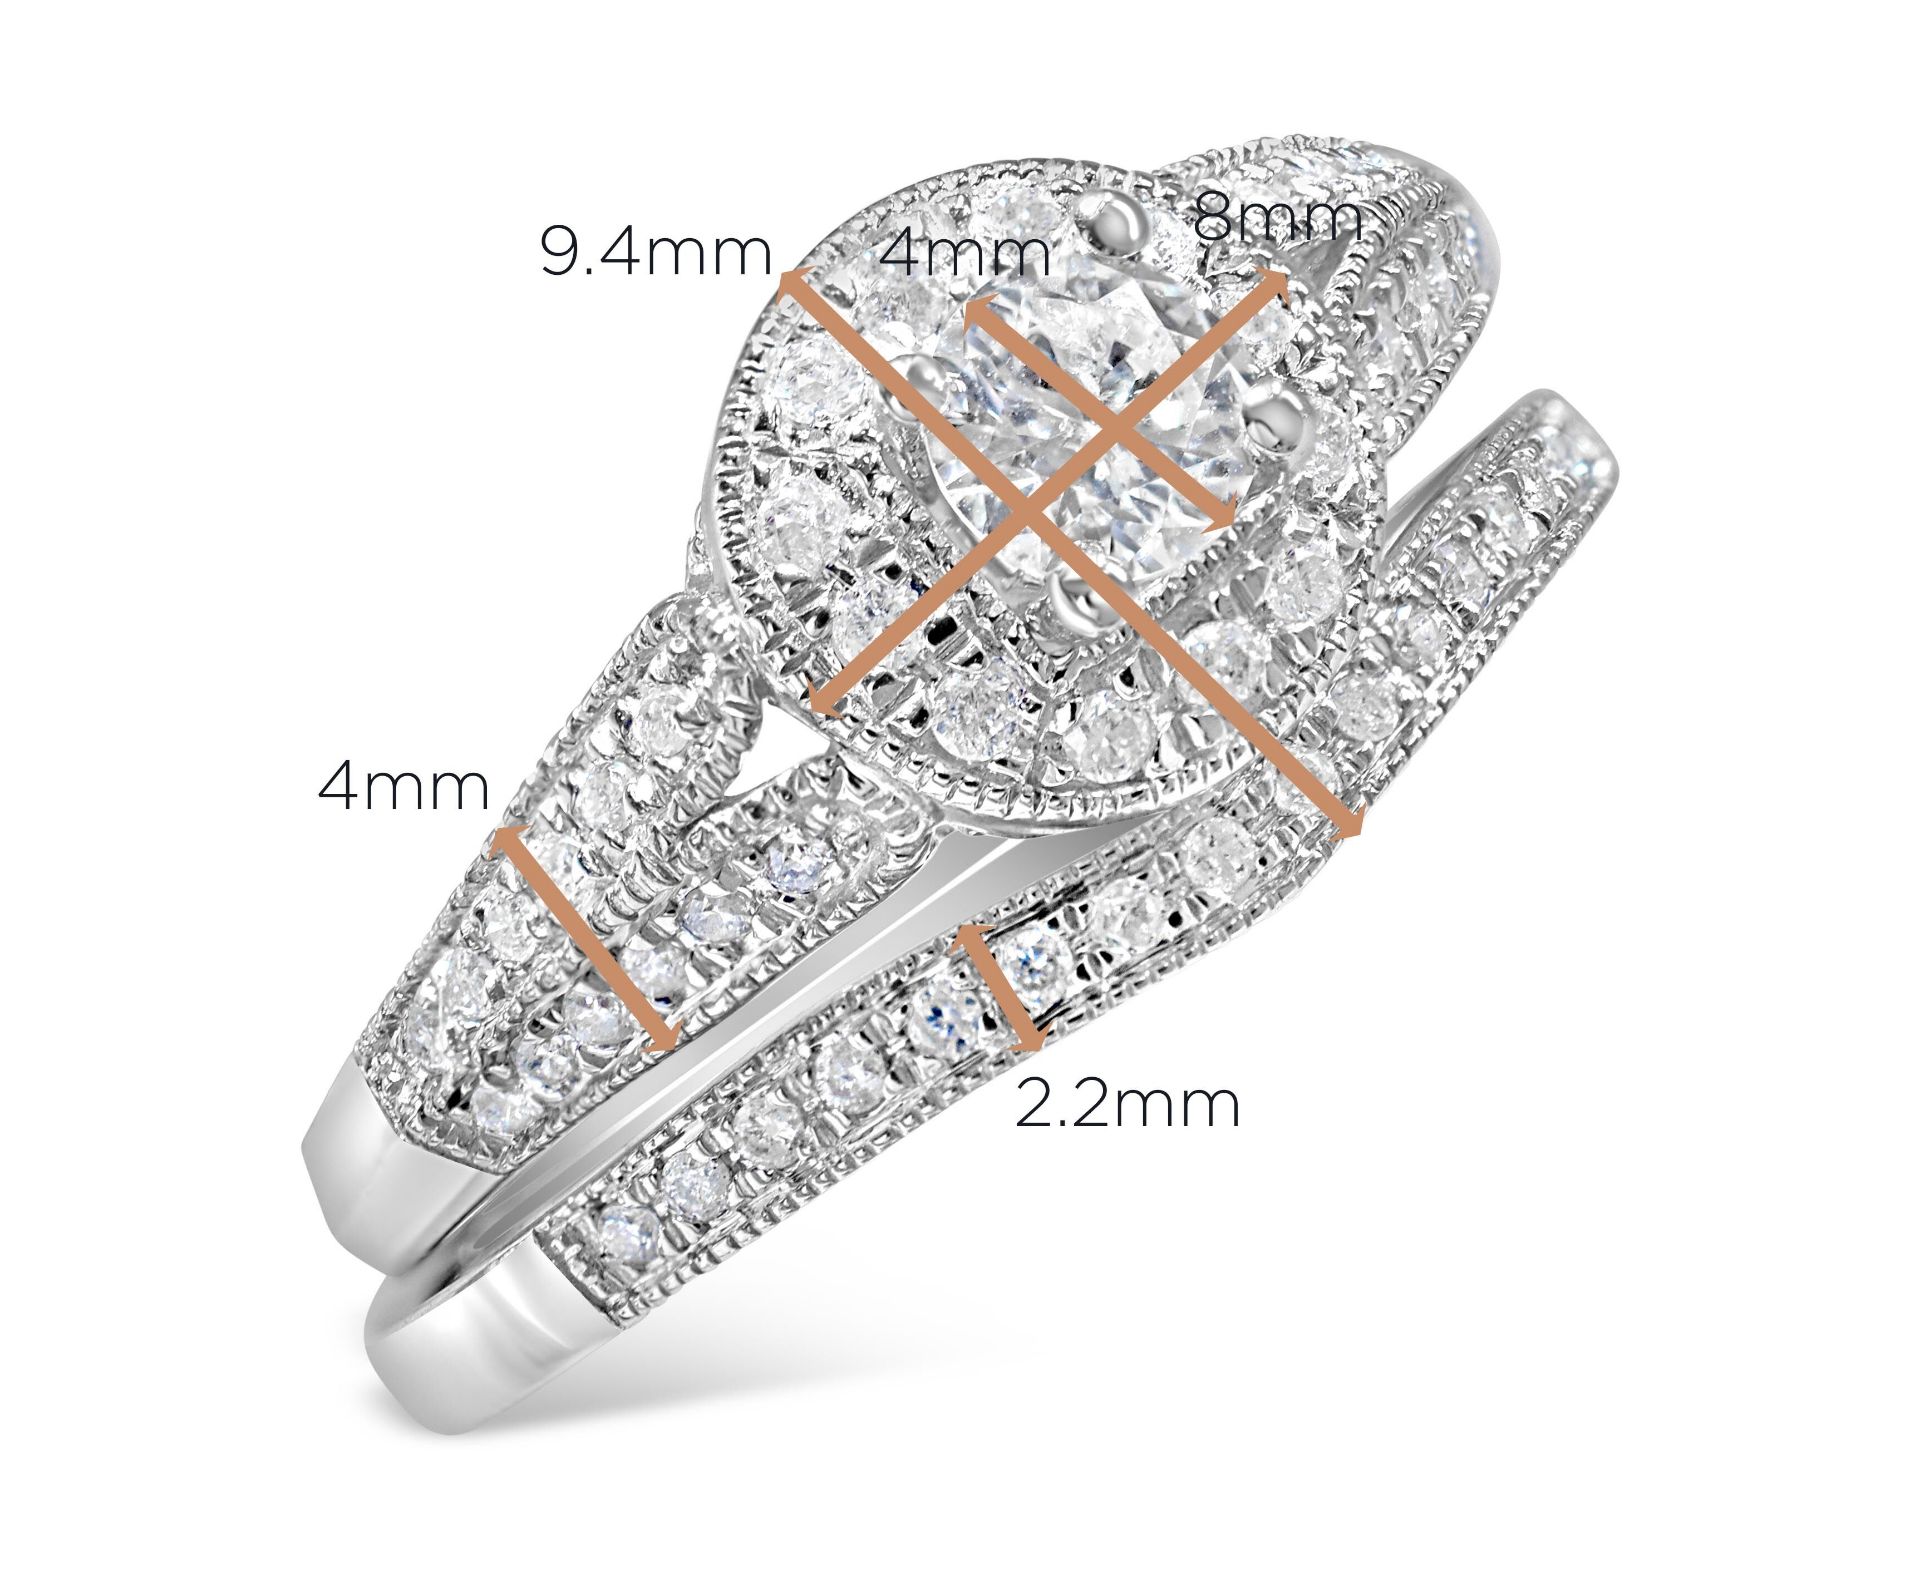 Bridal Set Of Diamond Engagement and Wedding Rings - Image 2 of 4